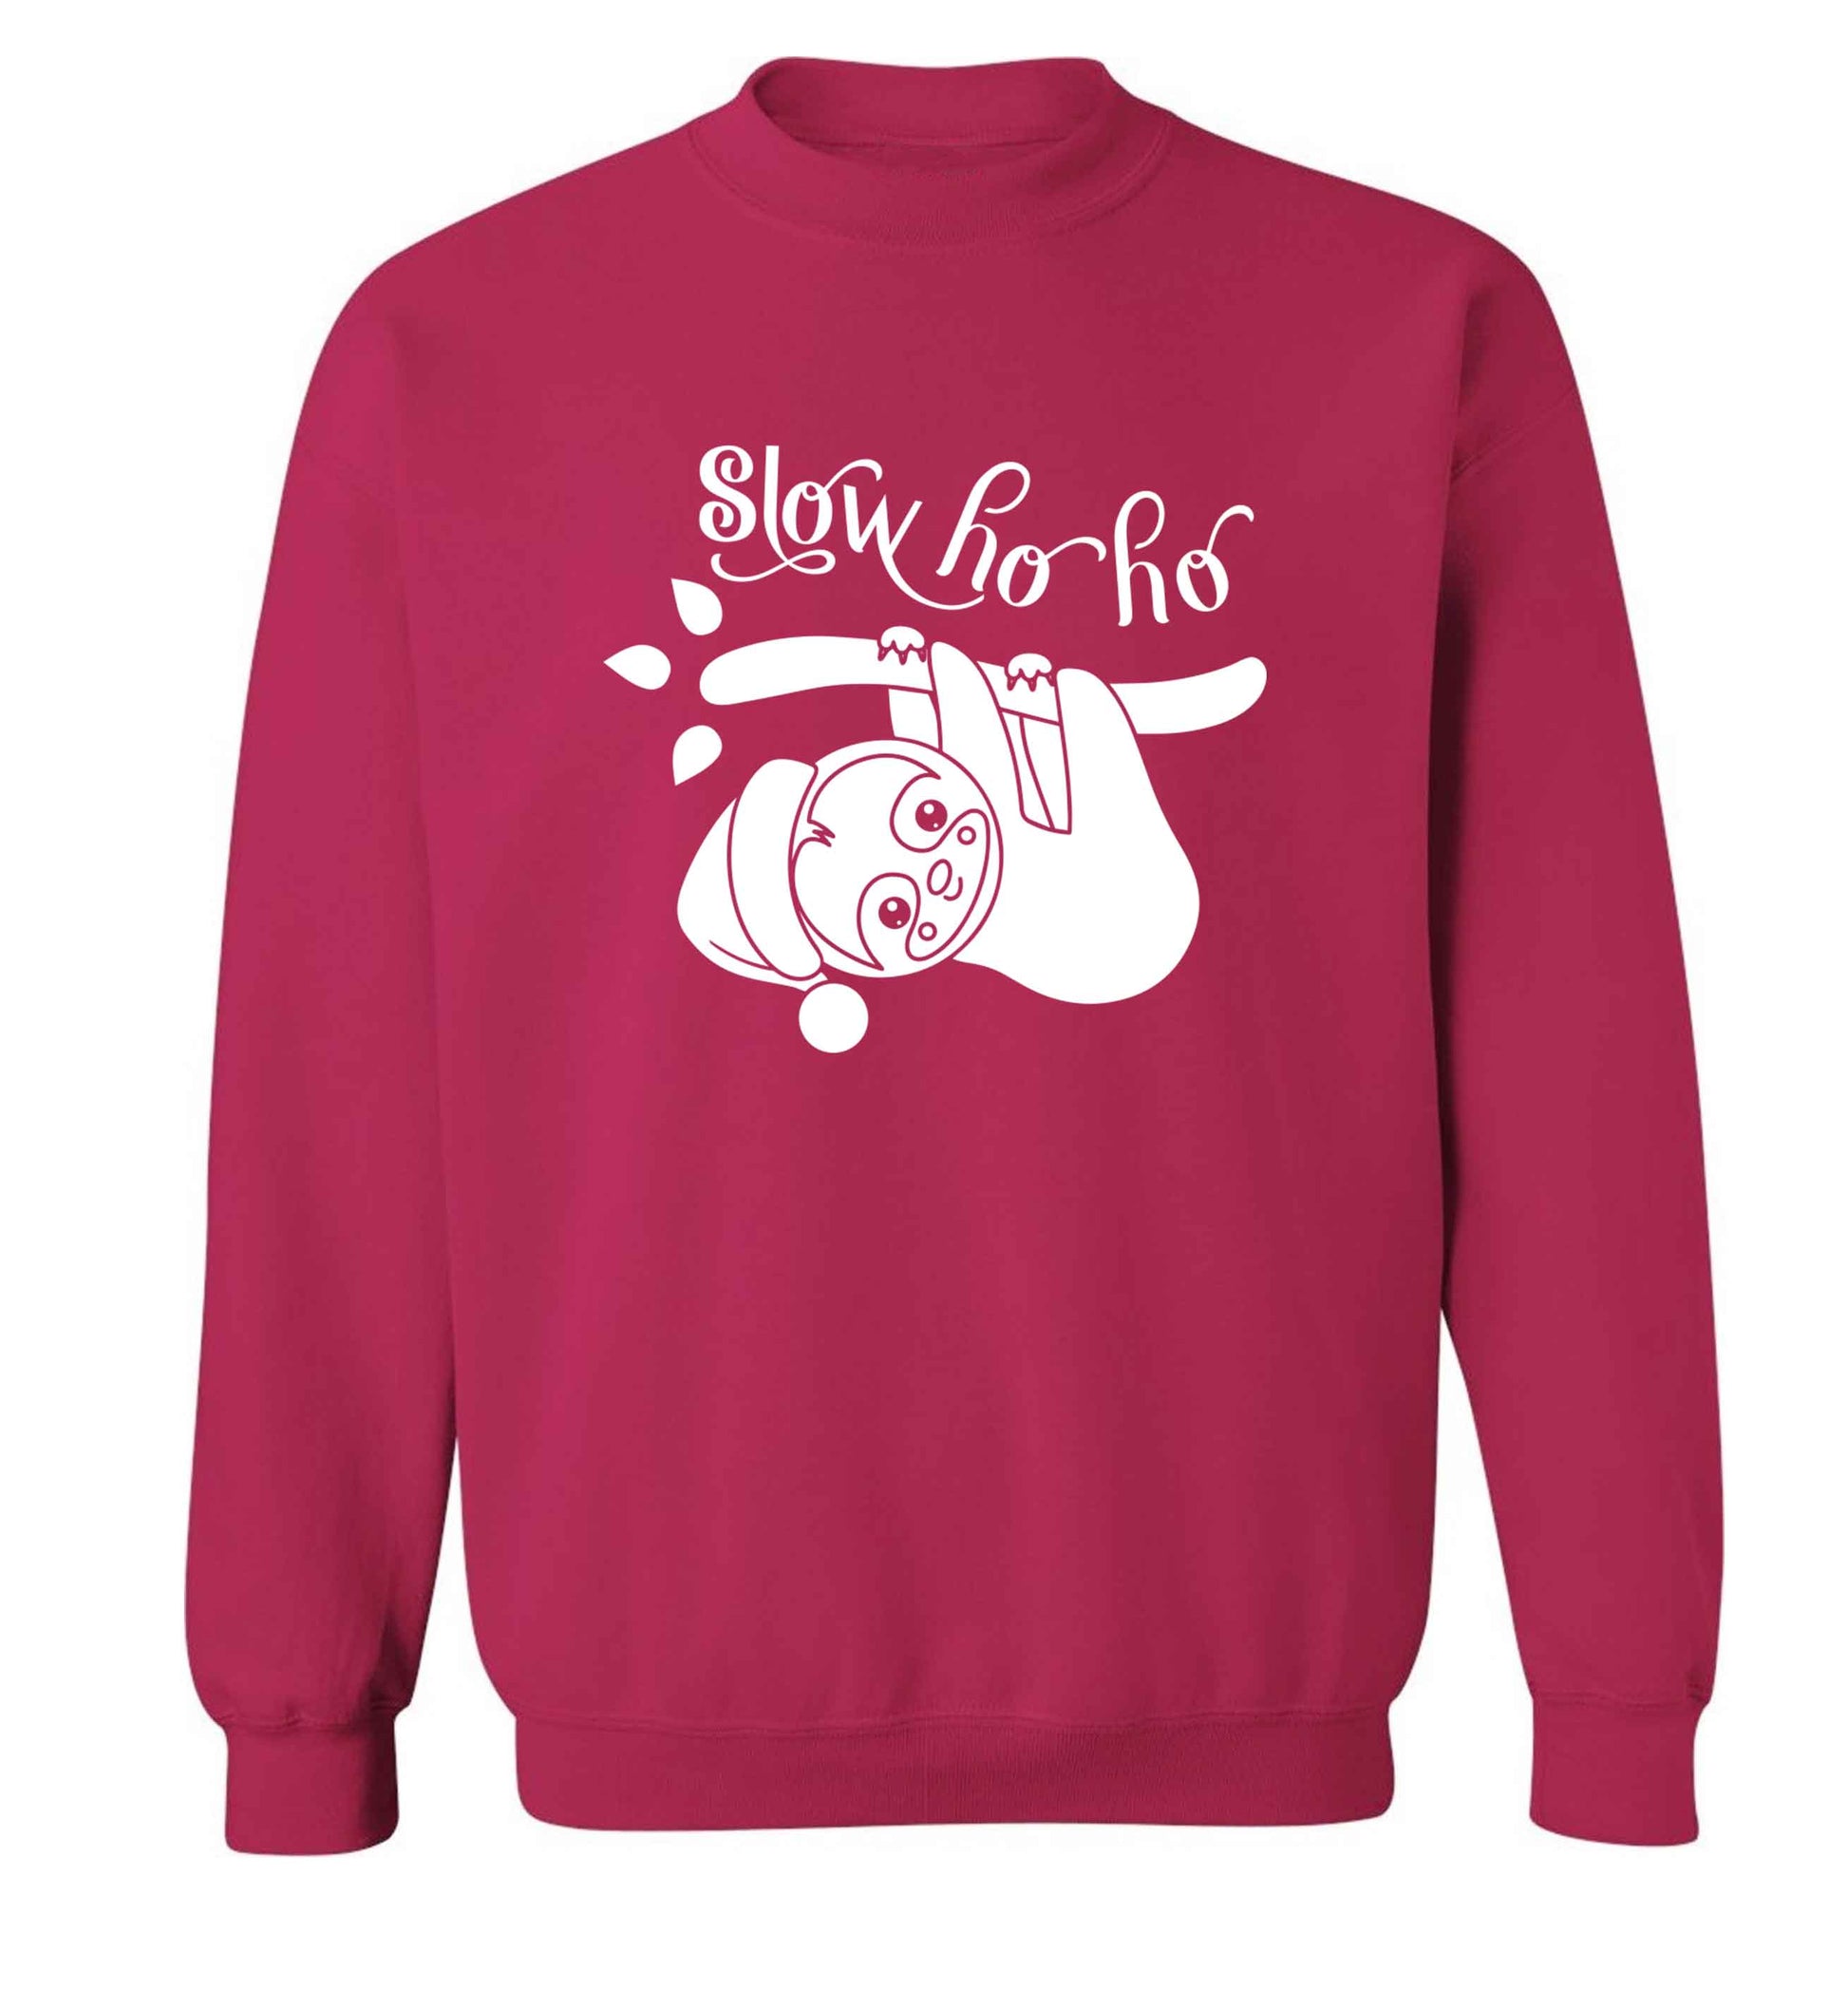 Slow Ho Ho adult's unisex pink sweater 2XL